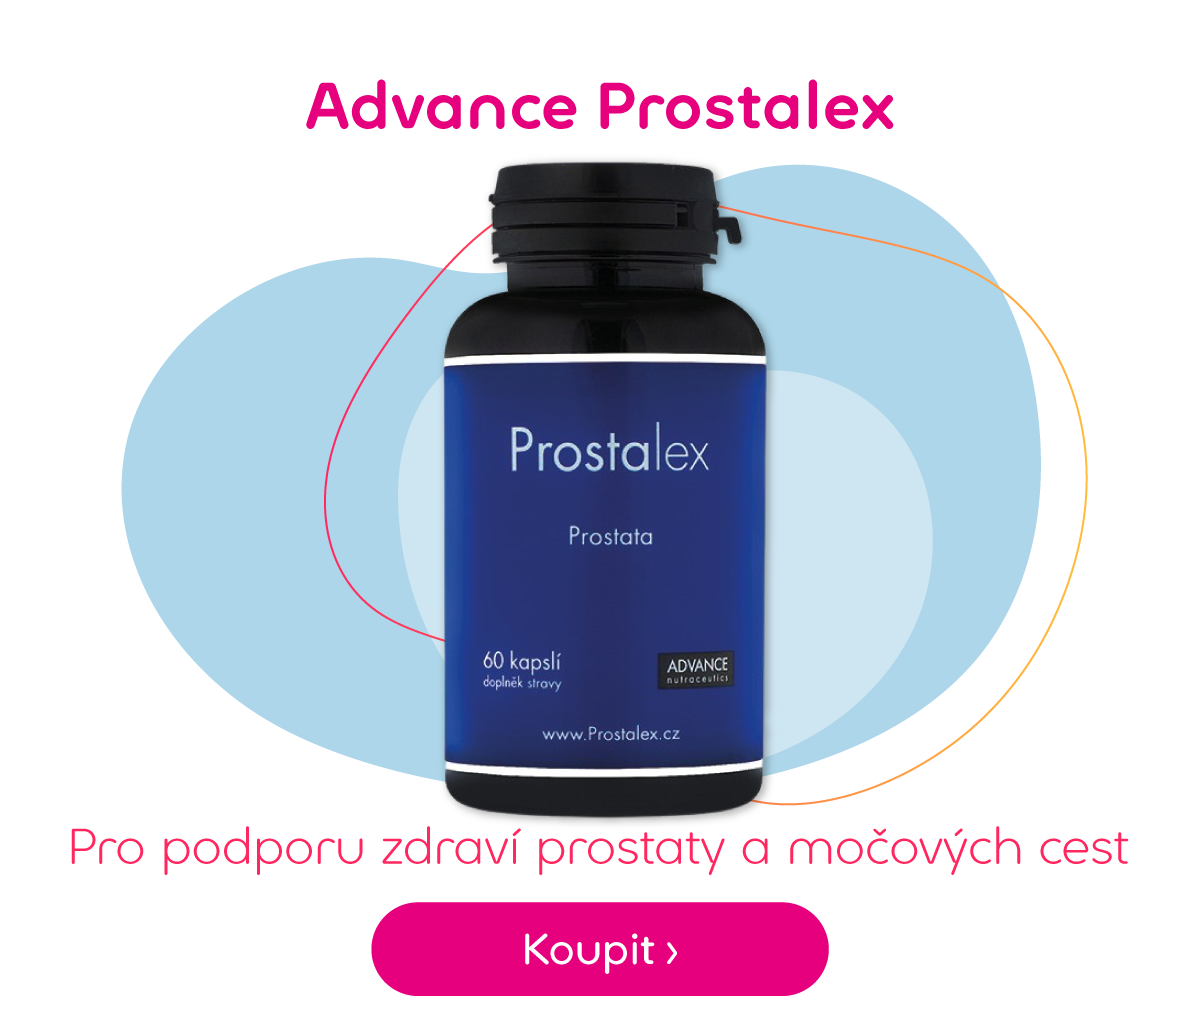 Advance Prostalex